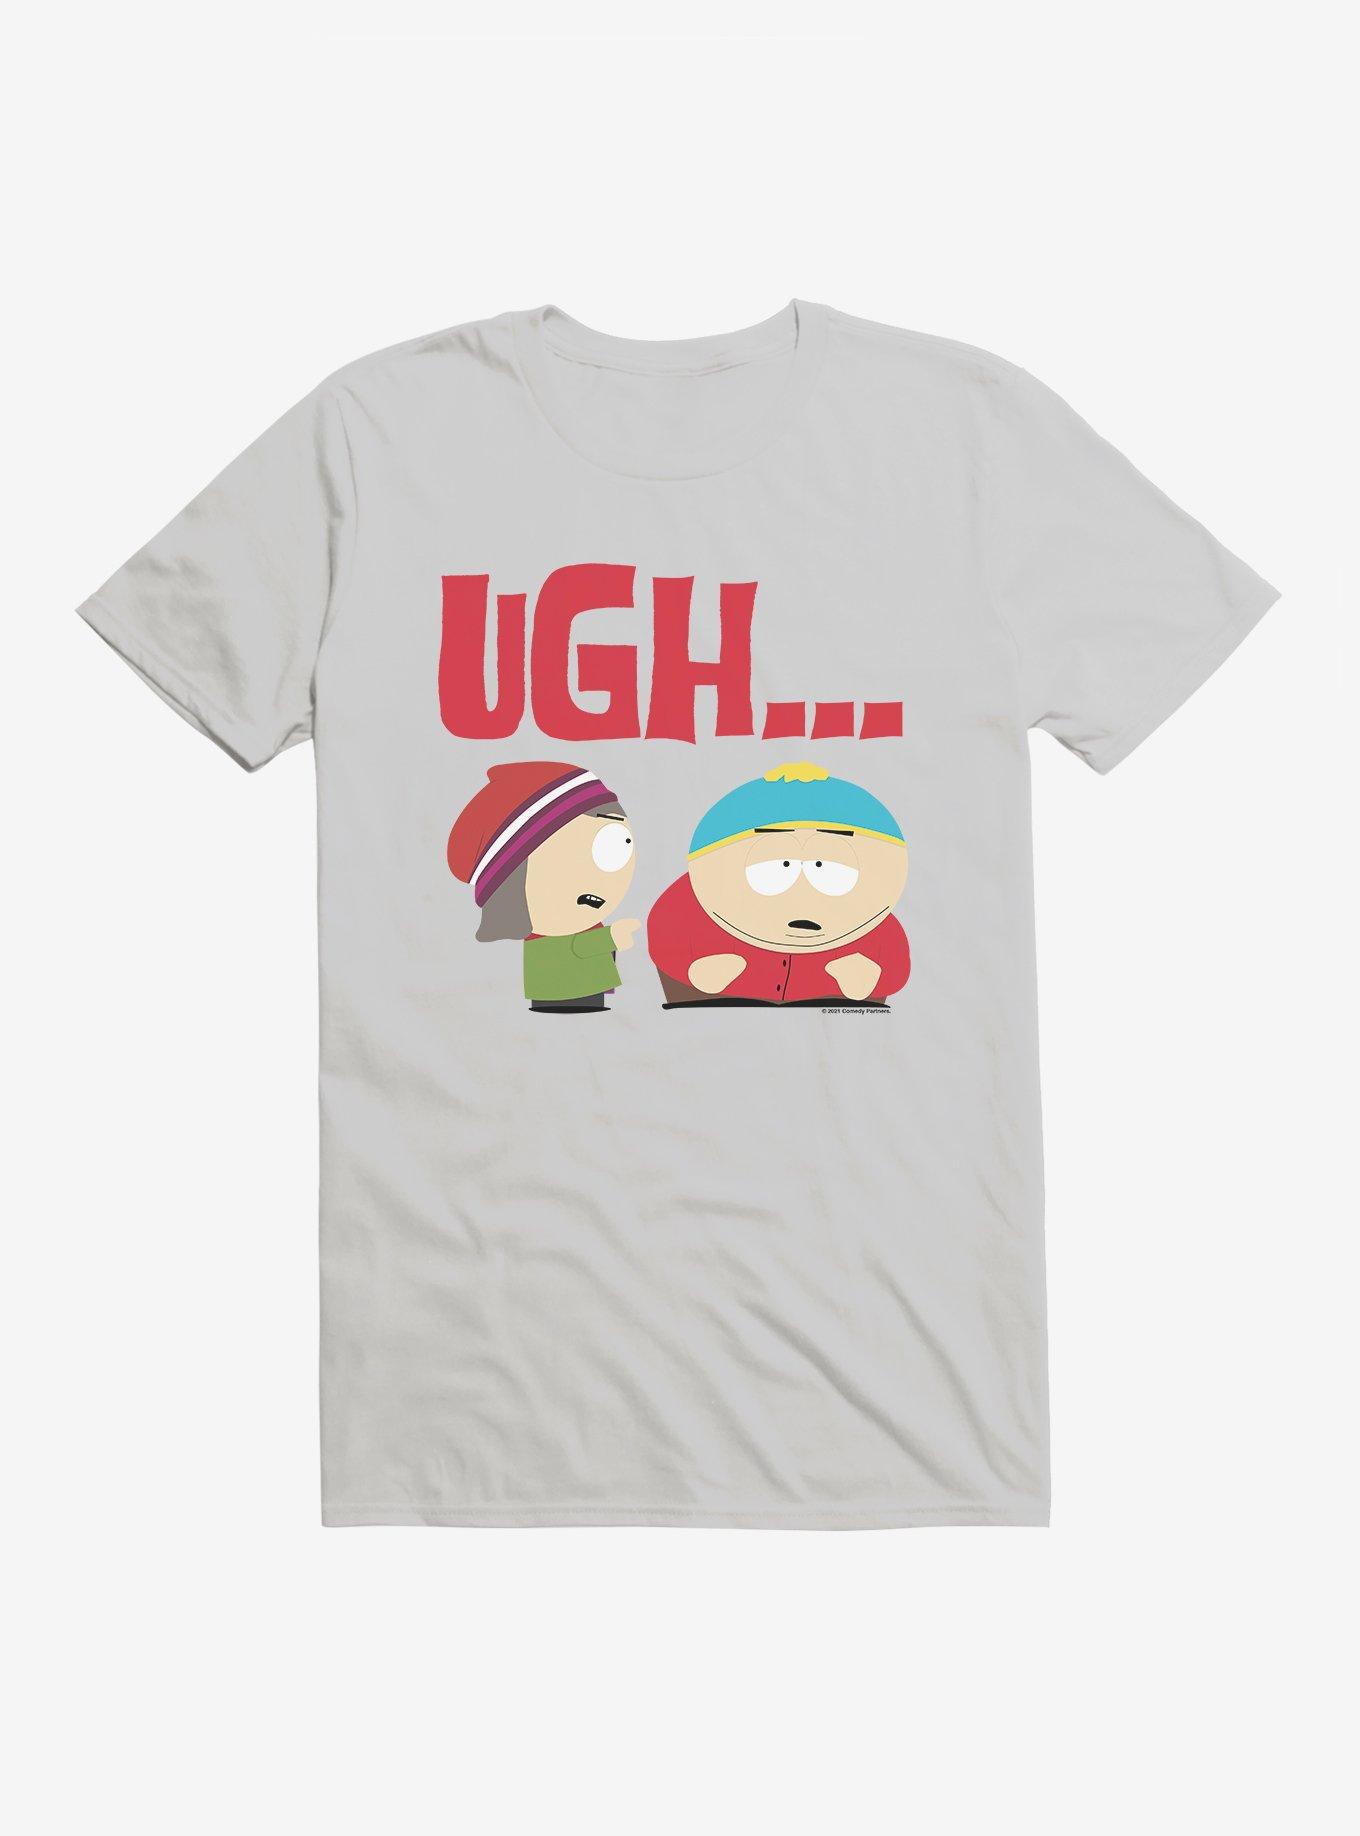 South Park Season Reference Cartman Relationship Problems T-Shirt, SILVER, hi-res